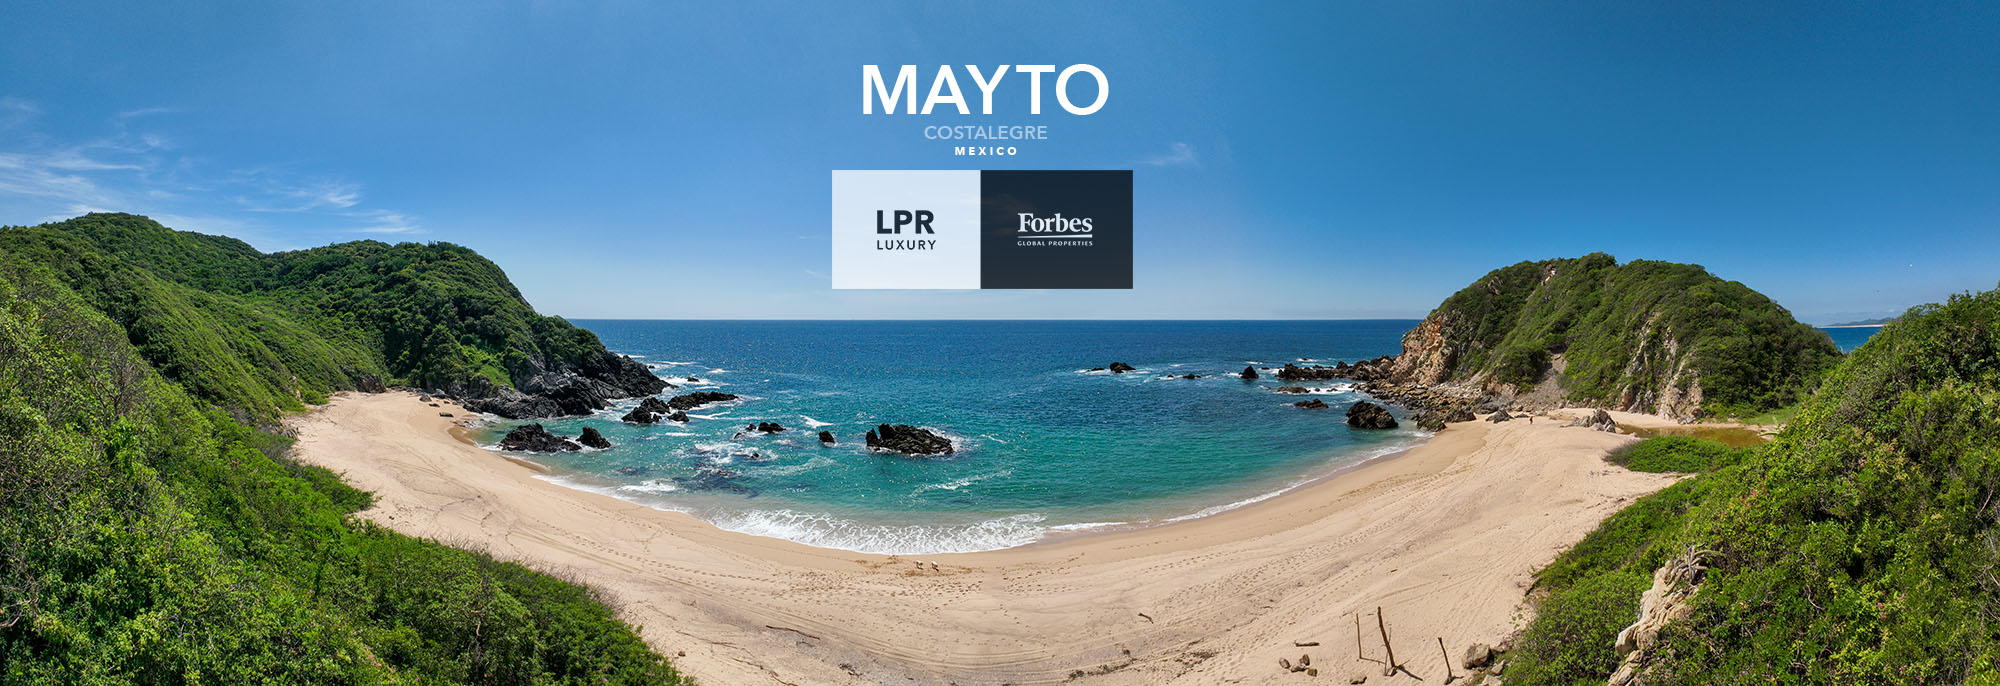 Playa Mayto Costalegre Jalisco Mexico LPR Luxury Land